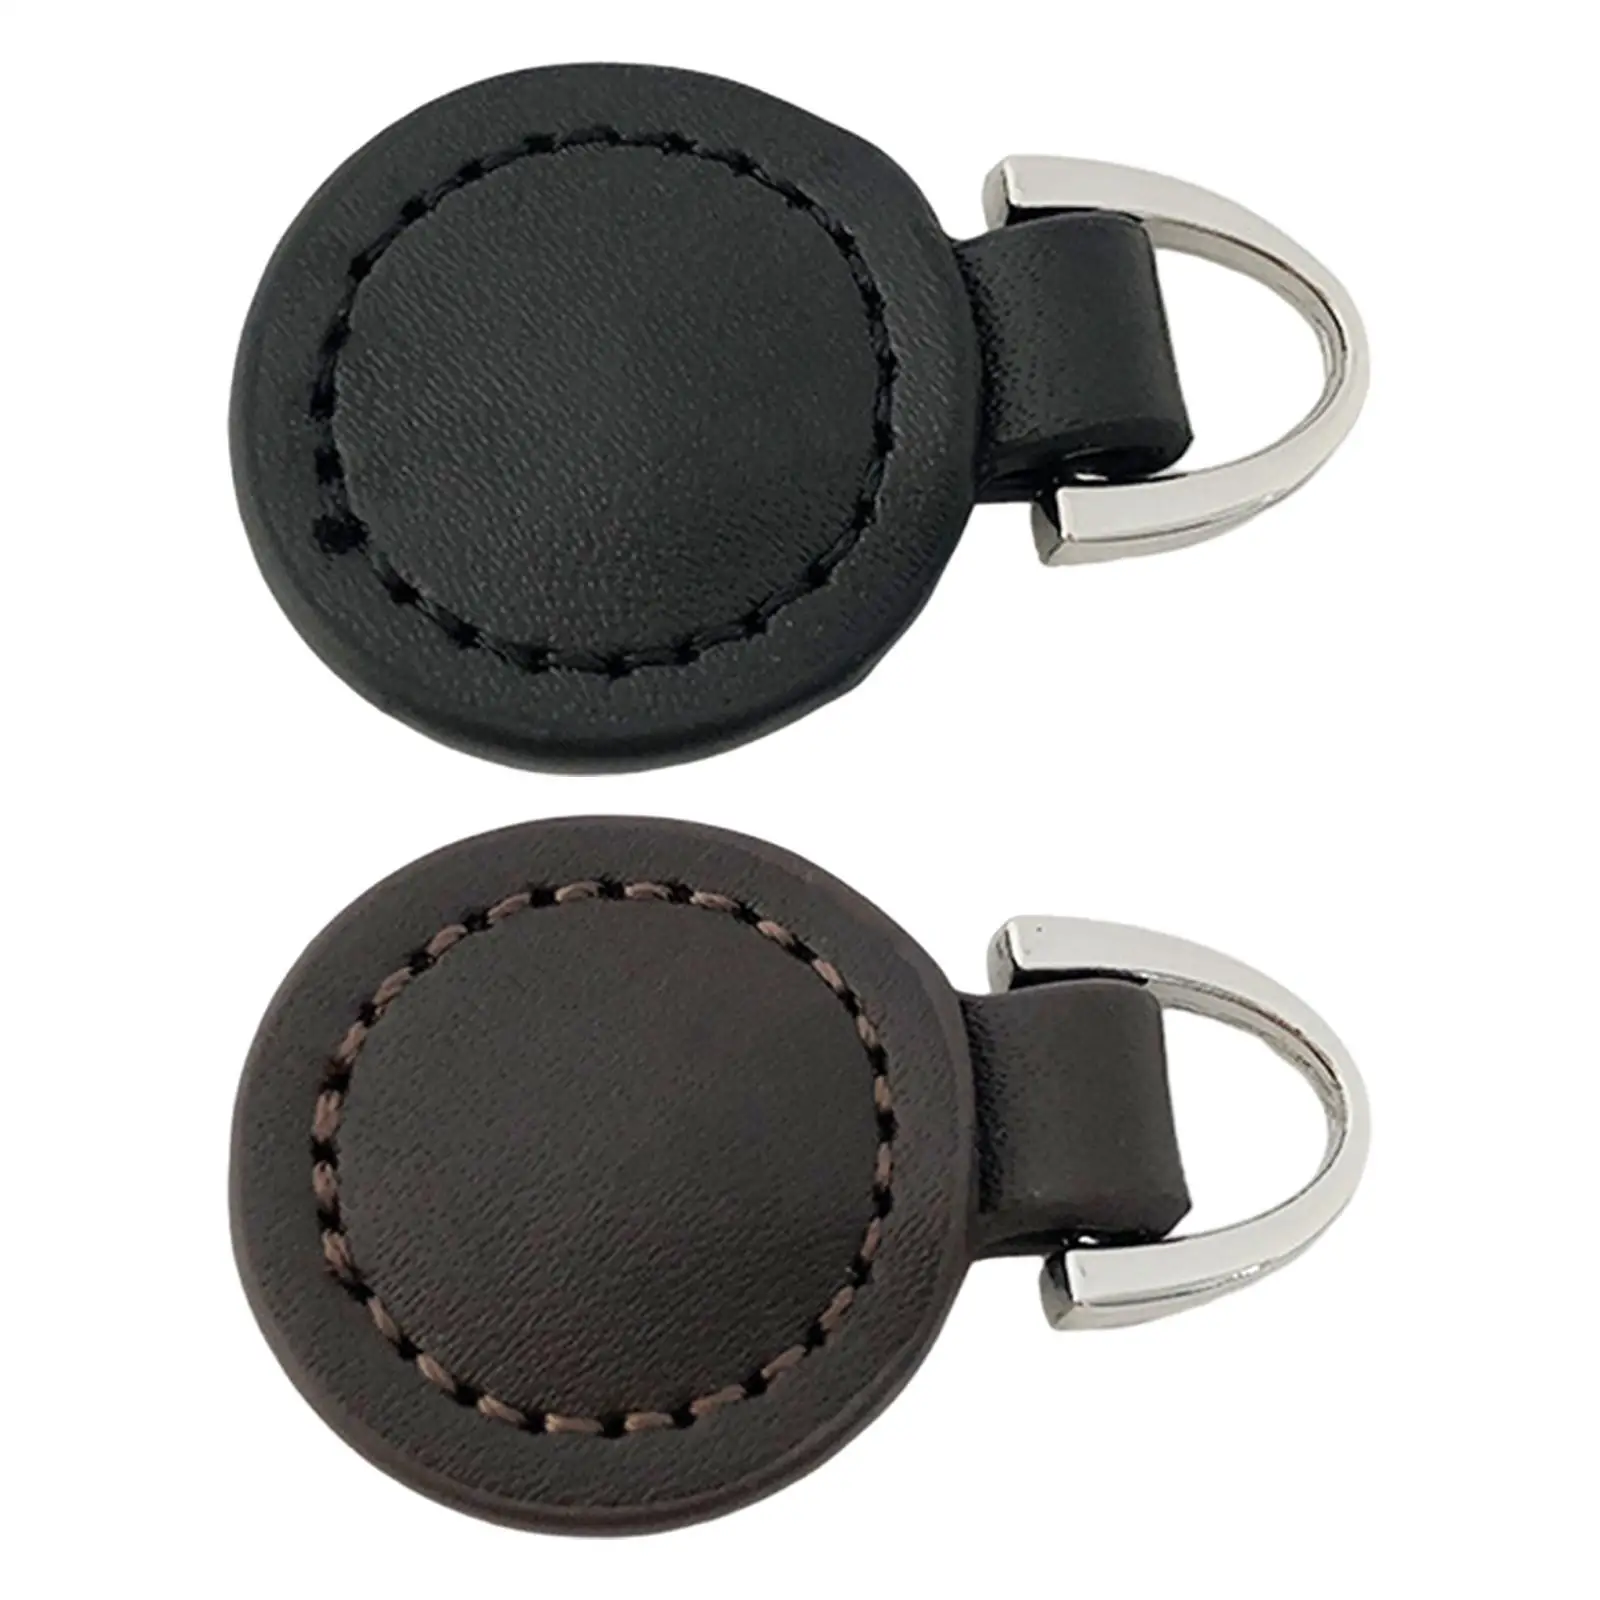 5x Zipper Tags Luggage Parts Detachable Repair Replacement Zipper Pulls Zipper Pull Tabs for Sewing DIY Craft Wallet Handbag